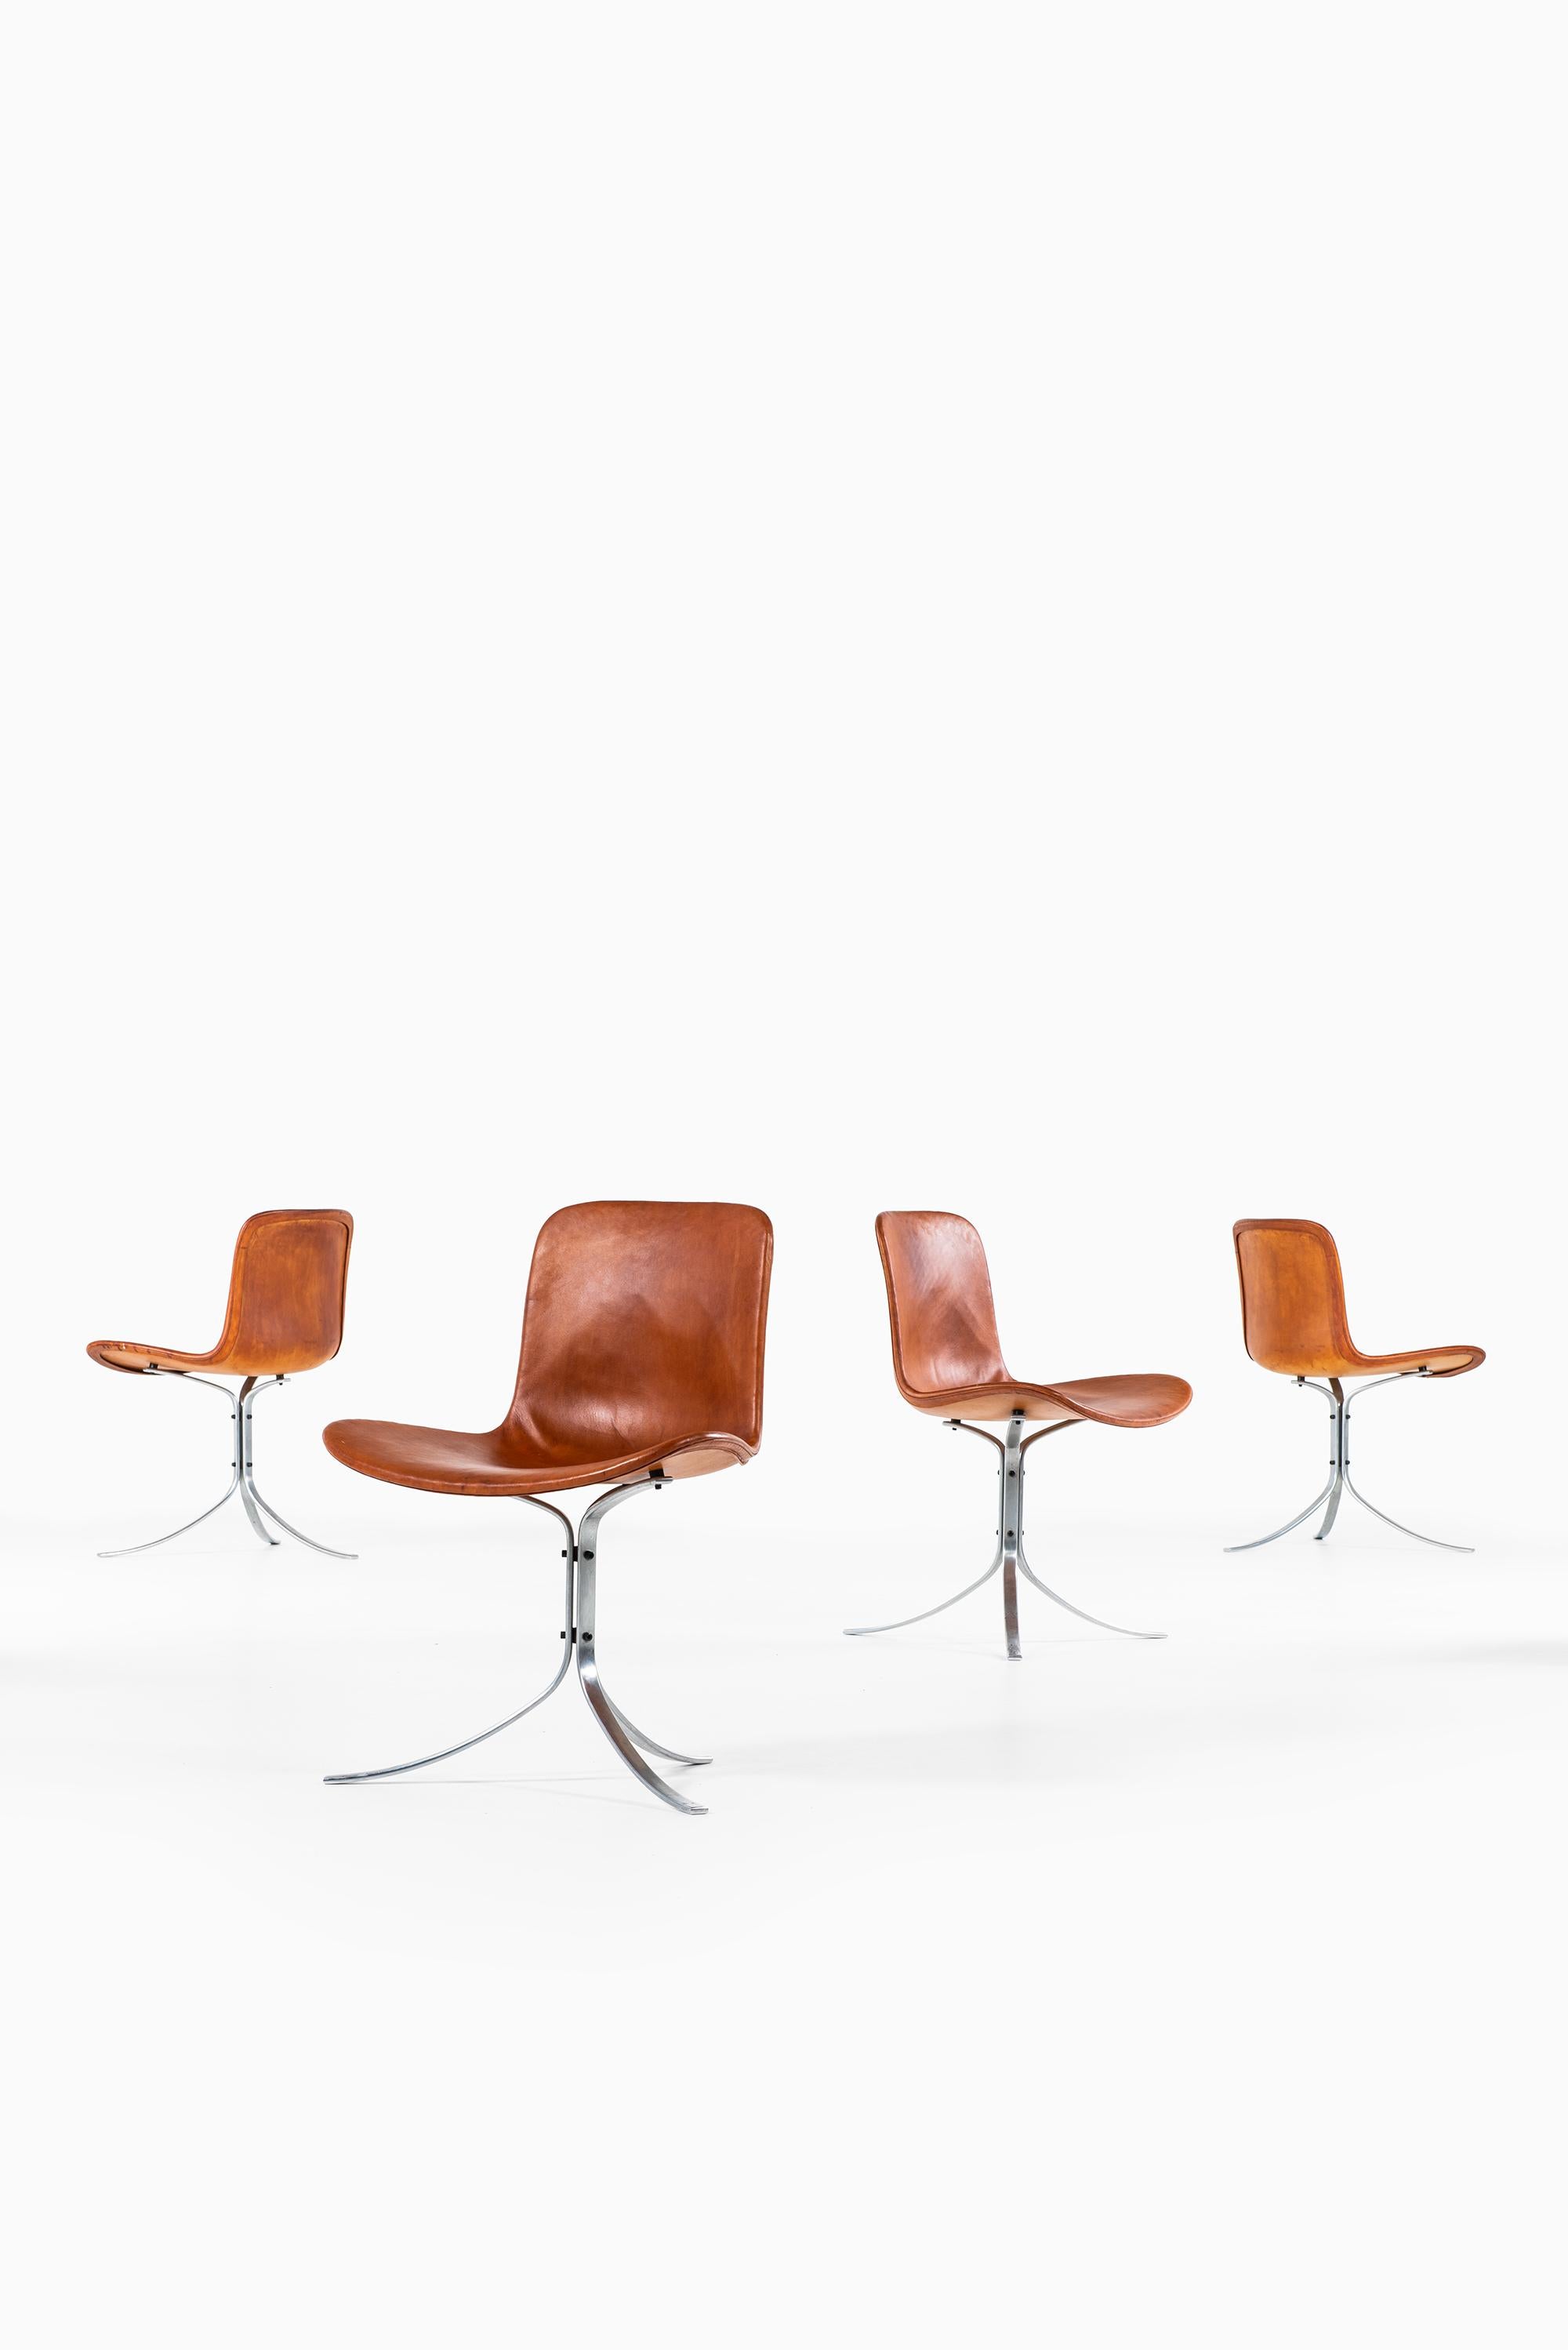 Rare set of 6 dining chairs model PK-9 designed by Poul Kjærholm. Produced by E. Kold Christensen in Denmark.